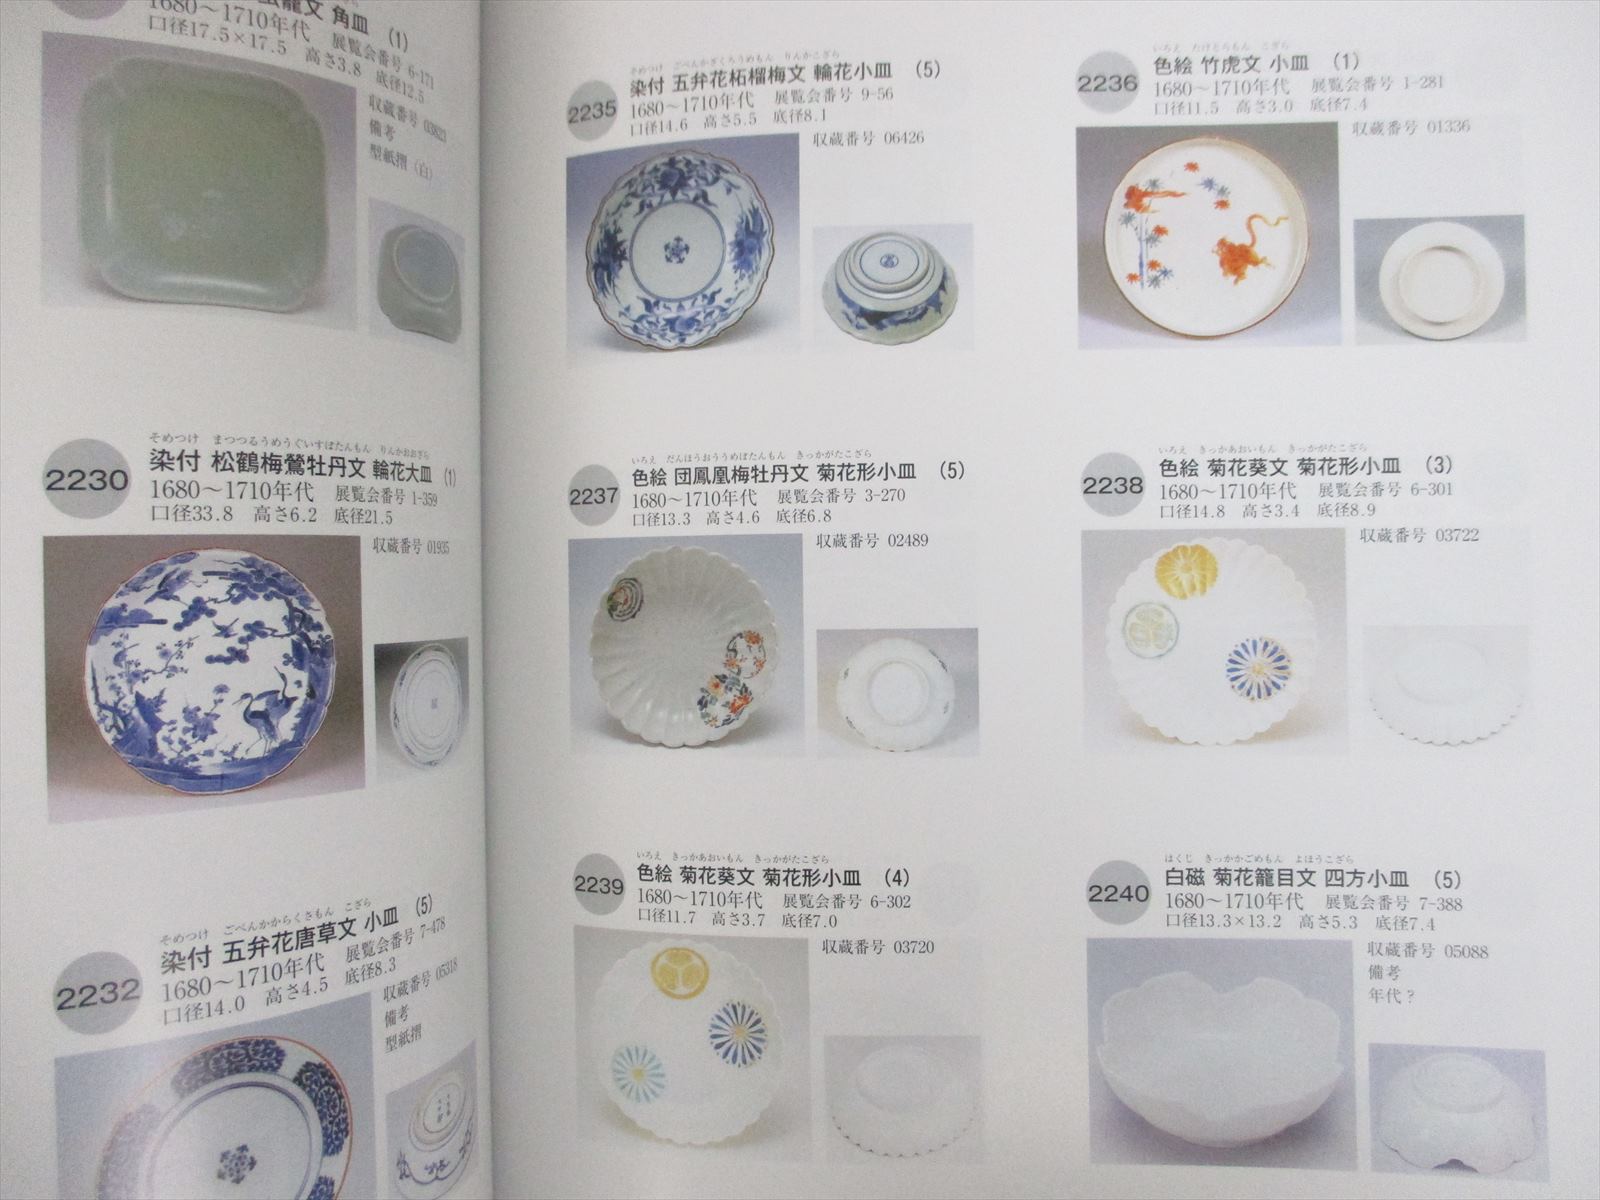 Shibata Collection Catalogue Complet 19 Ver Art Livre Photo Koimari Old Arita Ebay